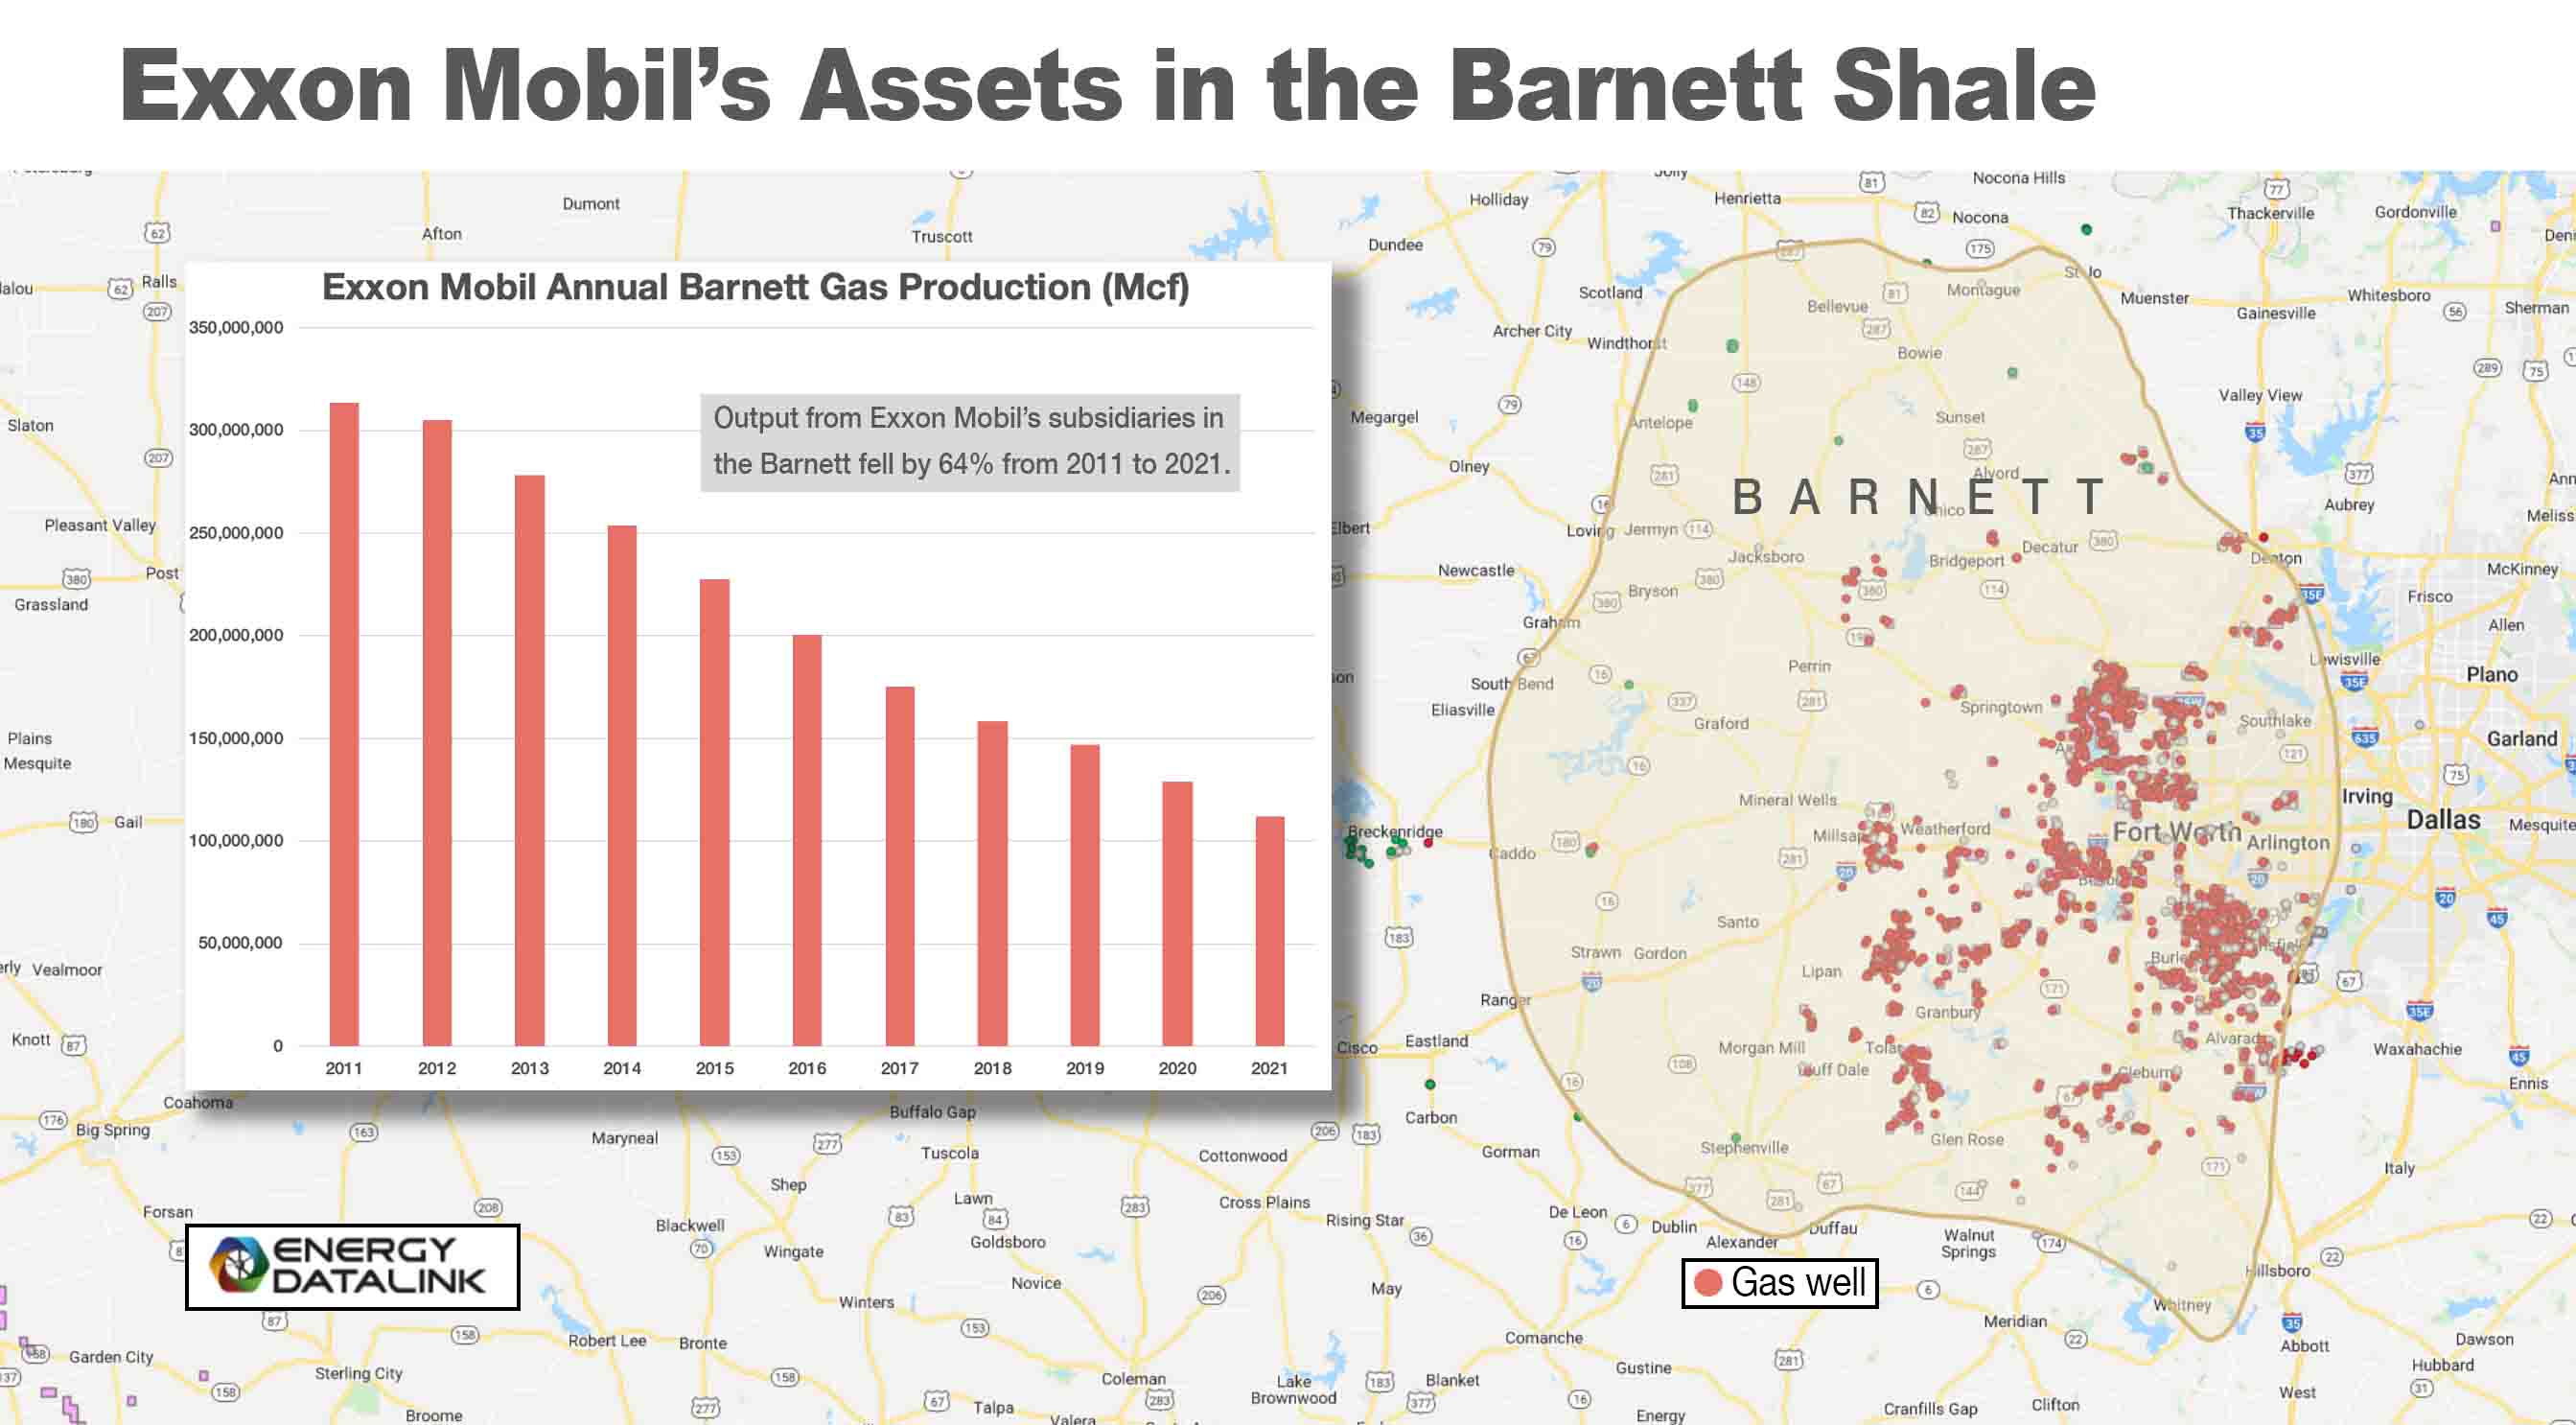 Map of assets in the Barnett Shale